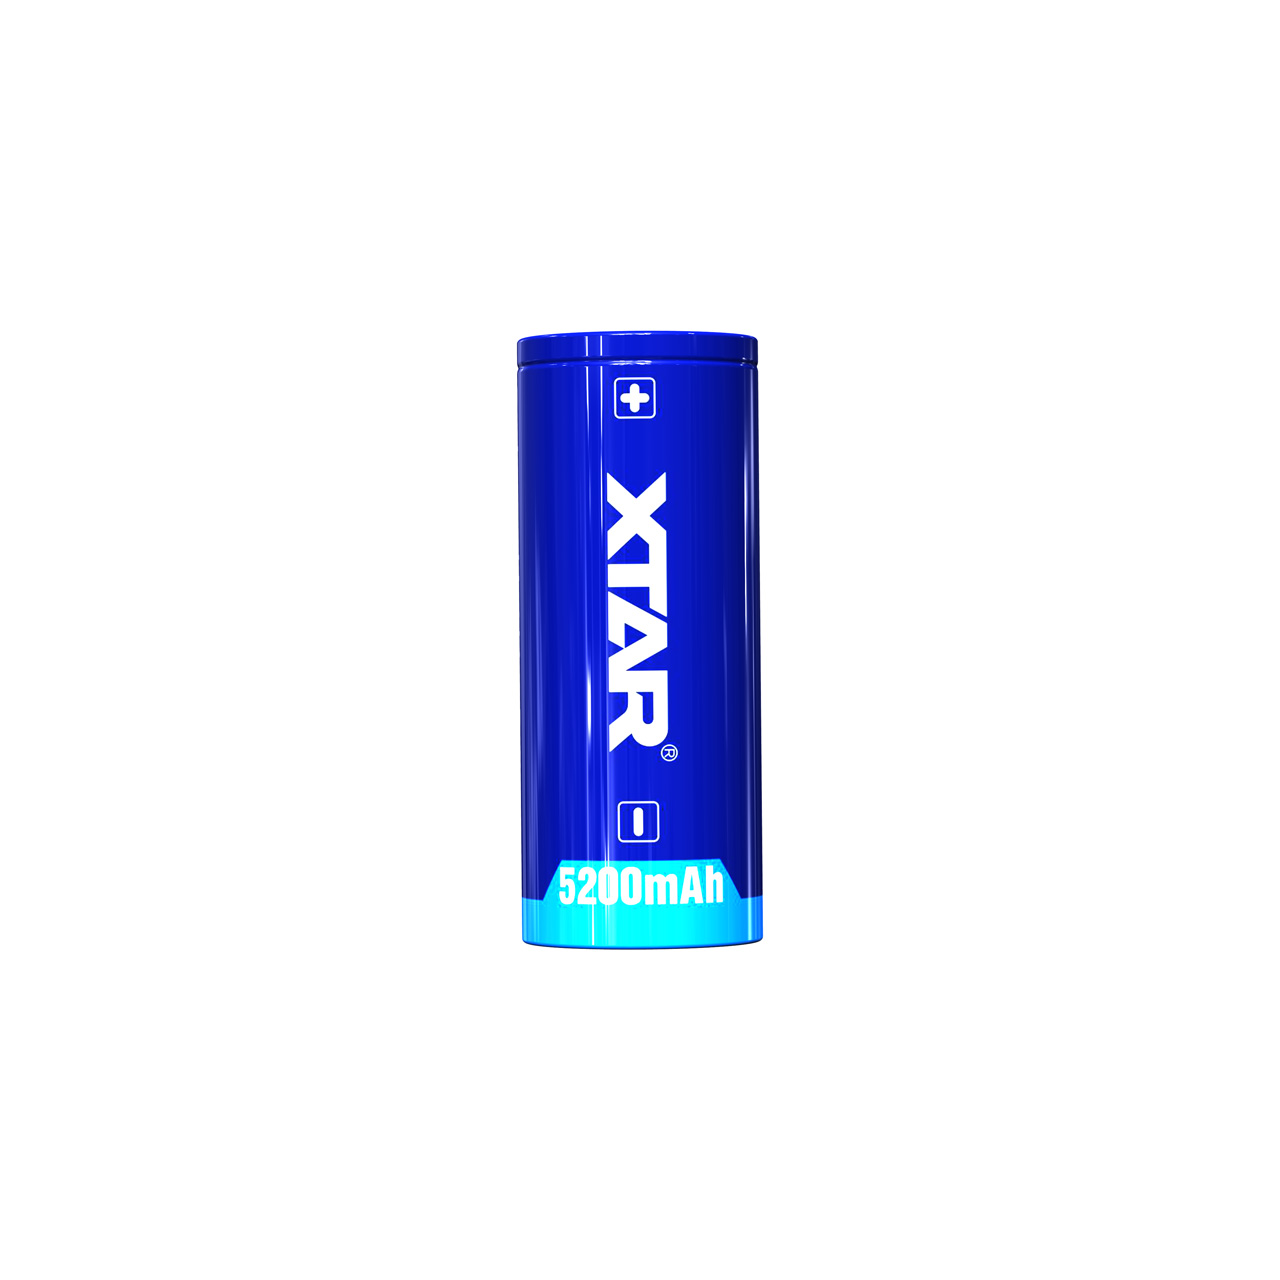 XTAR 26650 Rechargeable Li-ion Battery 5200mAh